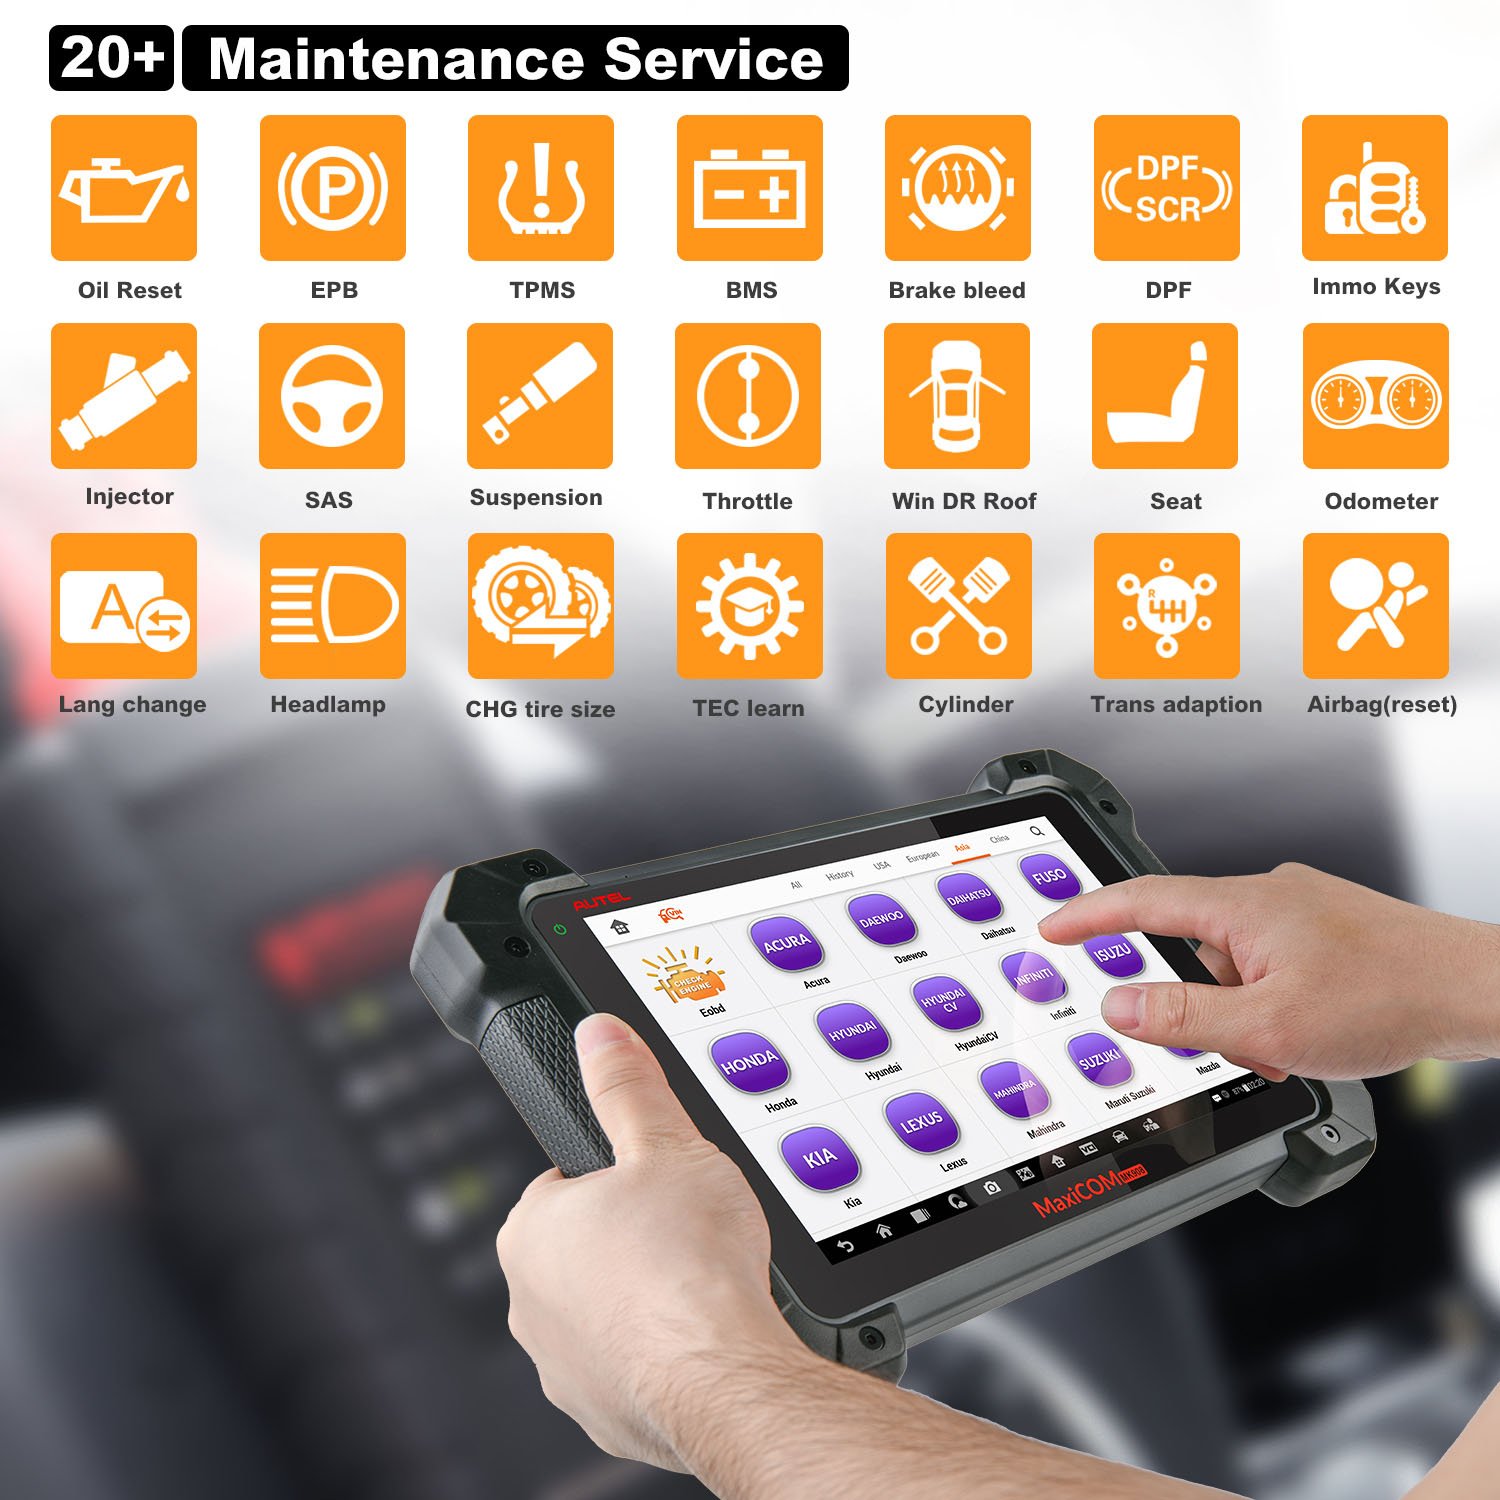 Autel MaxiCOM MK908 maintenance service